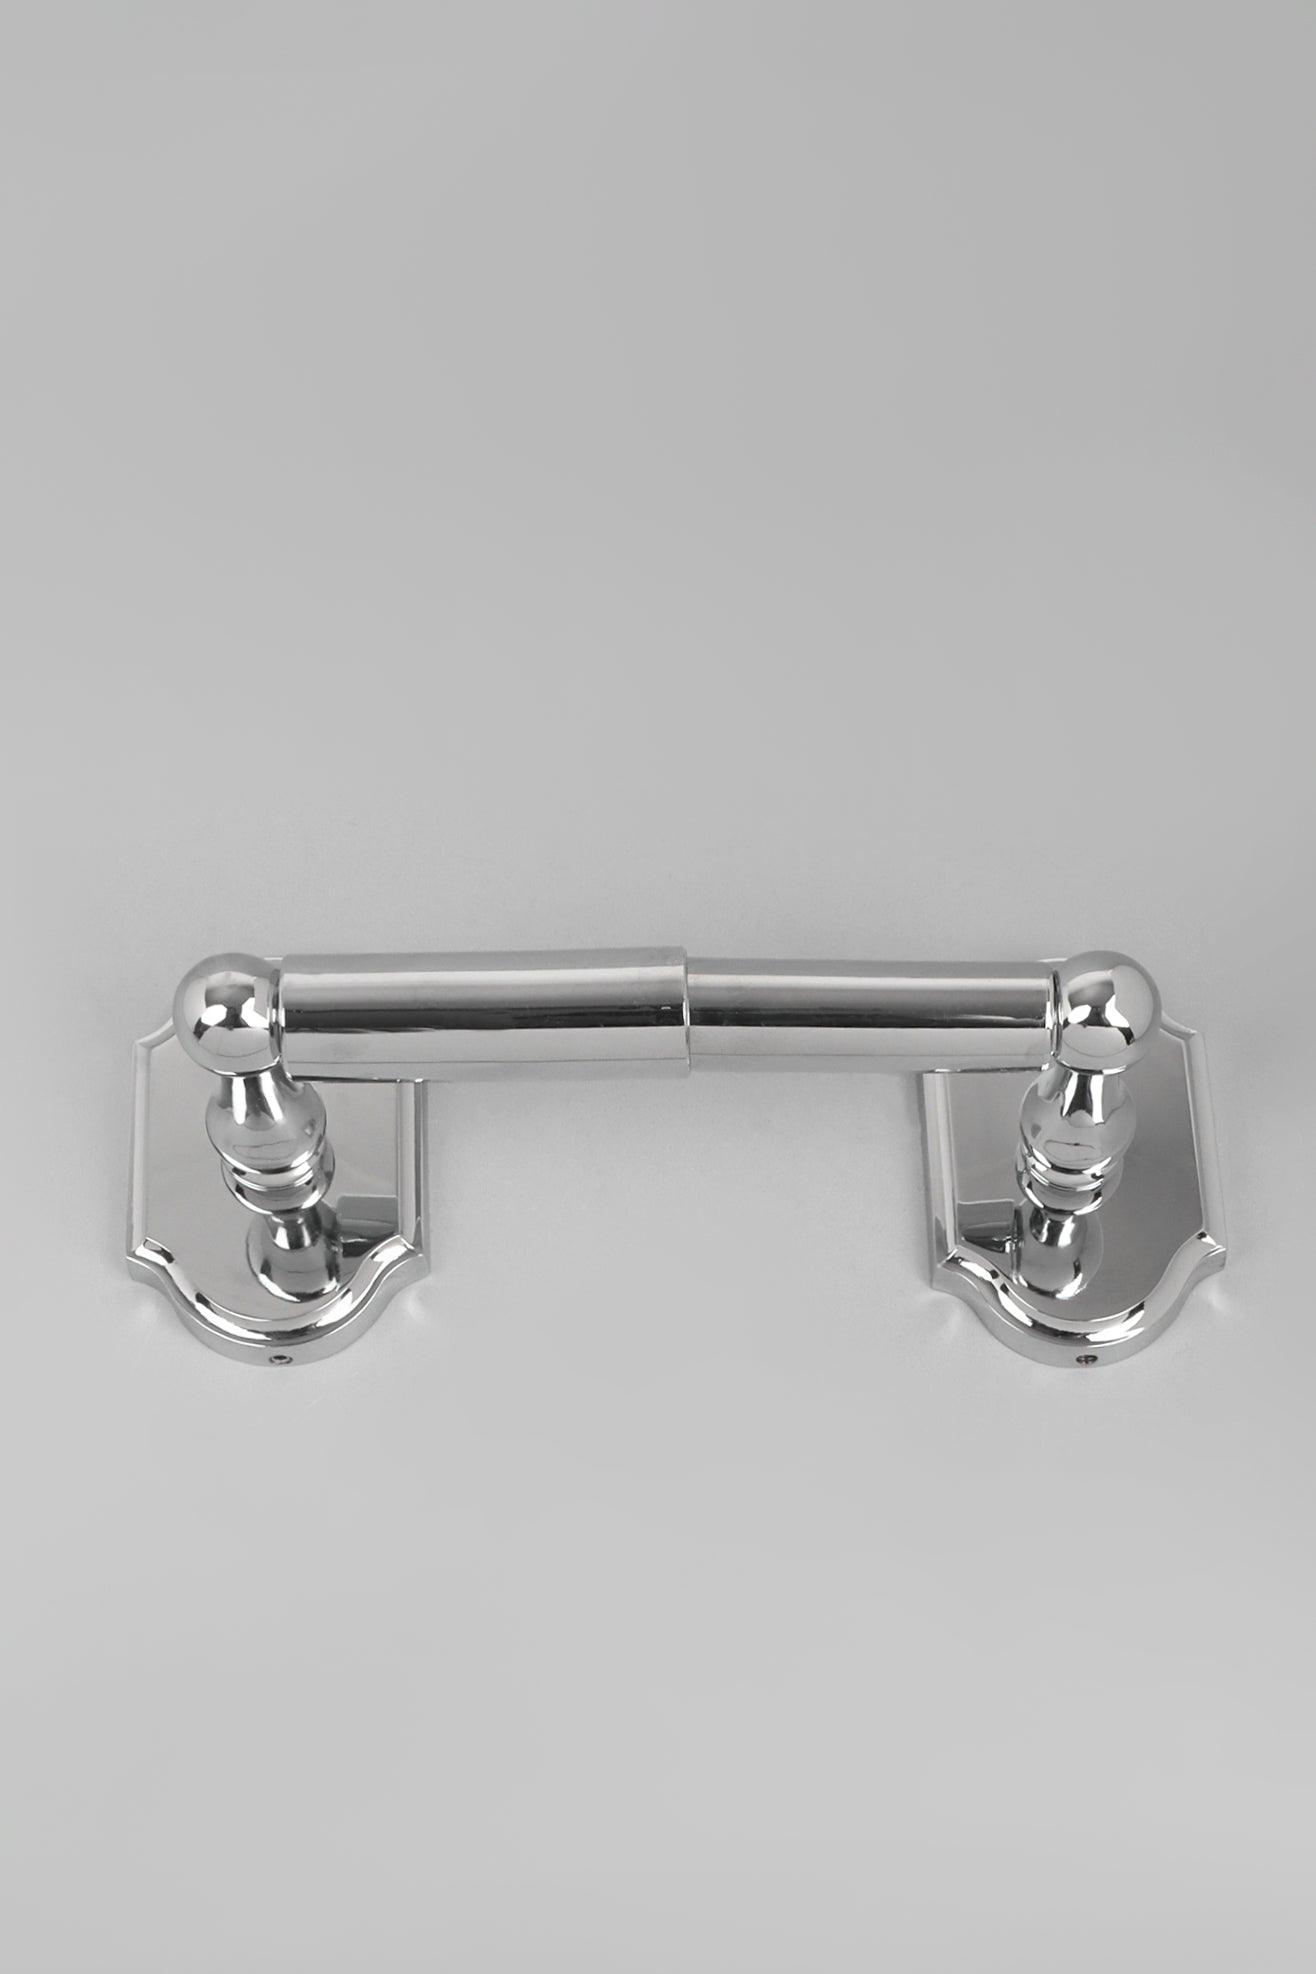 Gdecorstore Bathroom Chrome / Toilet Roll Holder Chrome Bathroom Accessories - Towel Ring Holder, Toilet Roll Holder, Towel Robe Hook